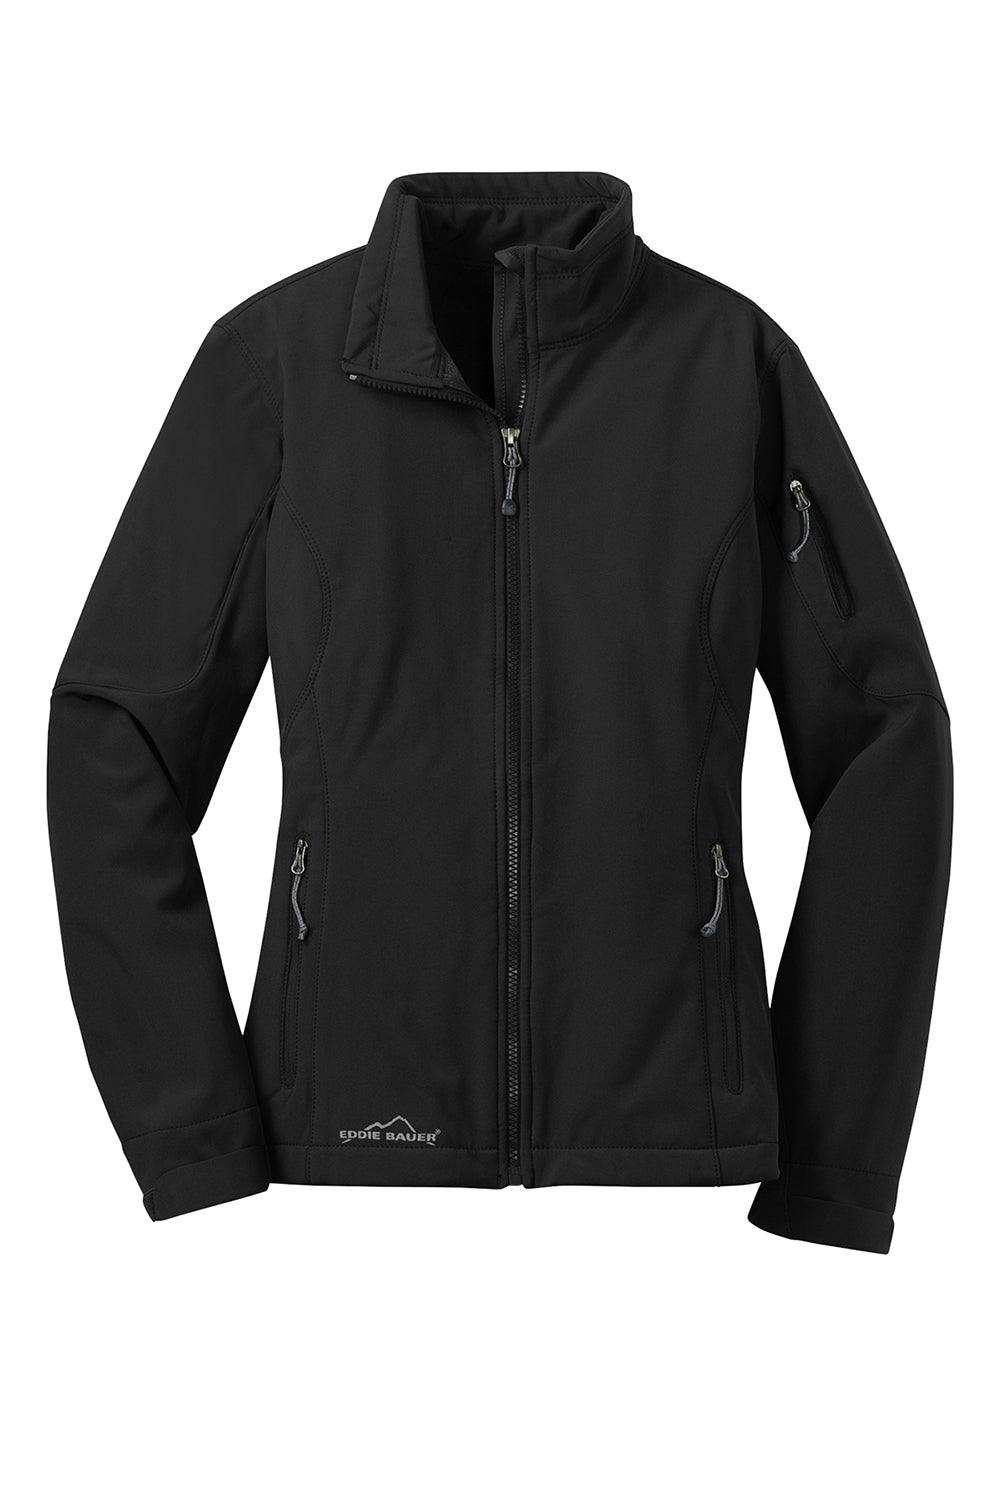 Eddie Bauer EB531 Womens Water Resistant Full Zip Jacket Black Flat Front